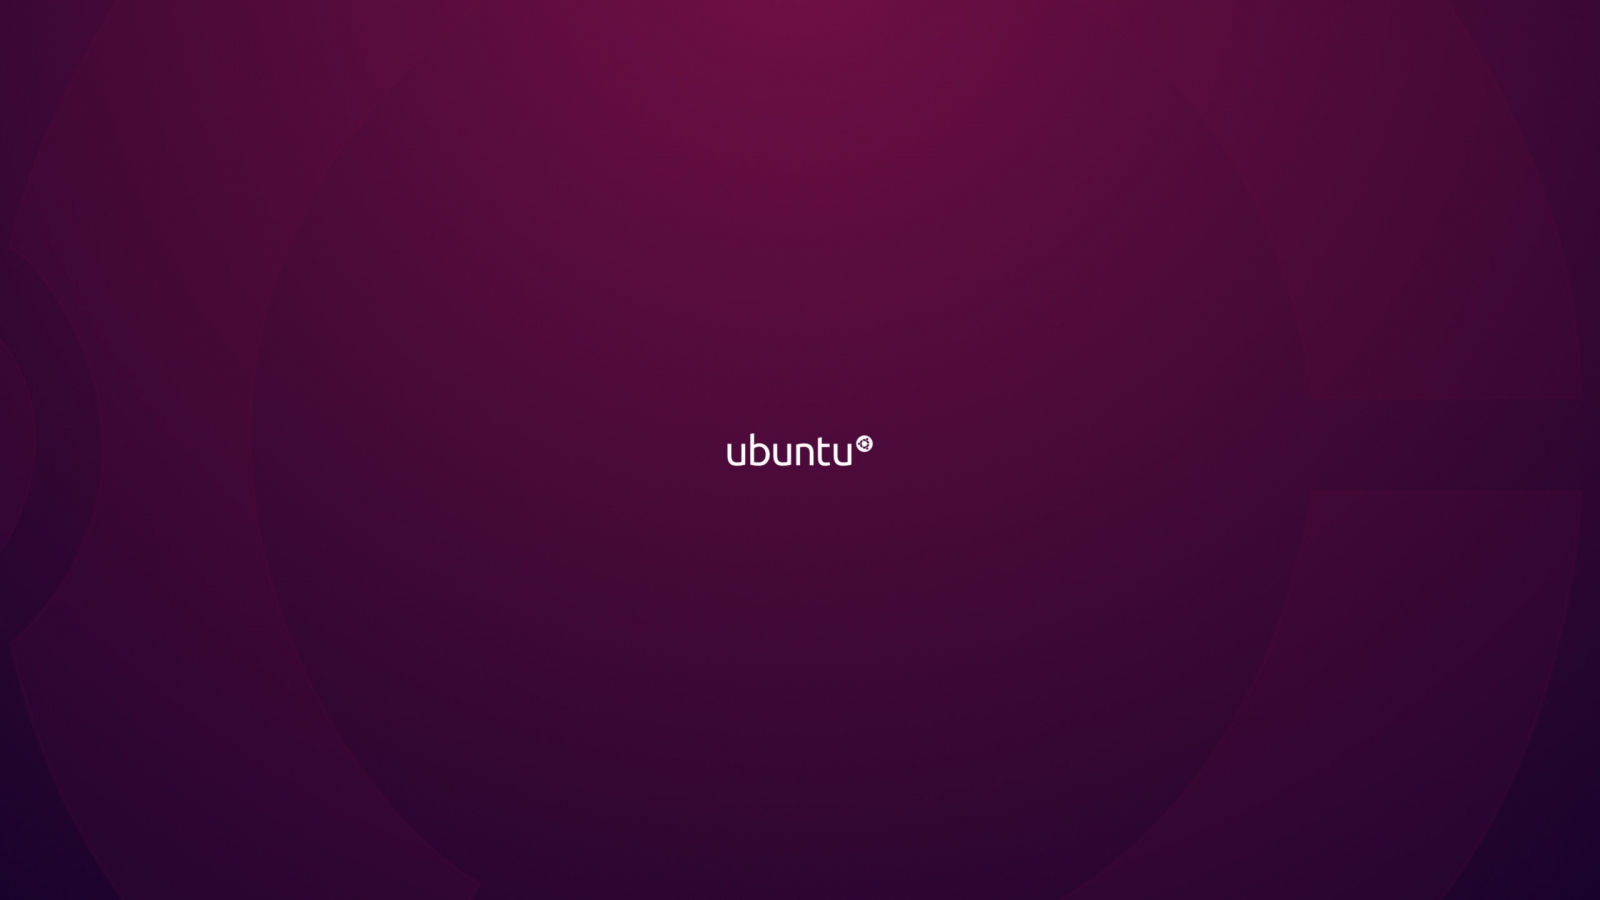 Ubuntu Purple for 1600 x 900 HDTV resolution